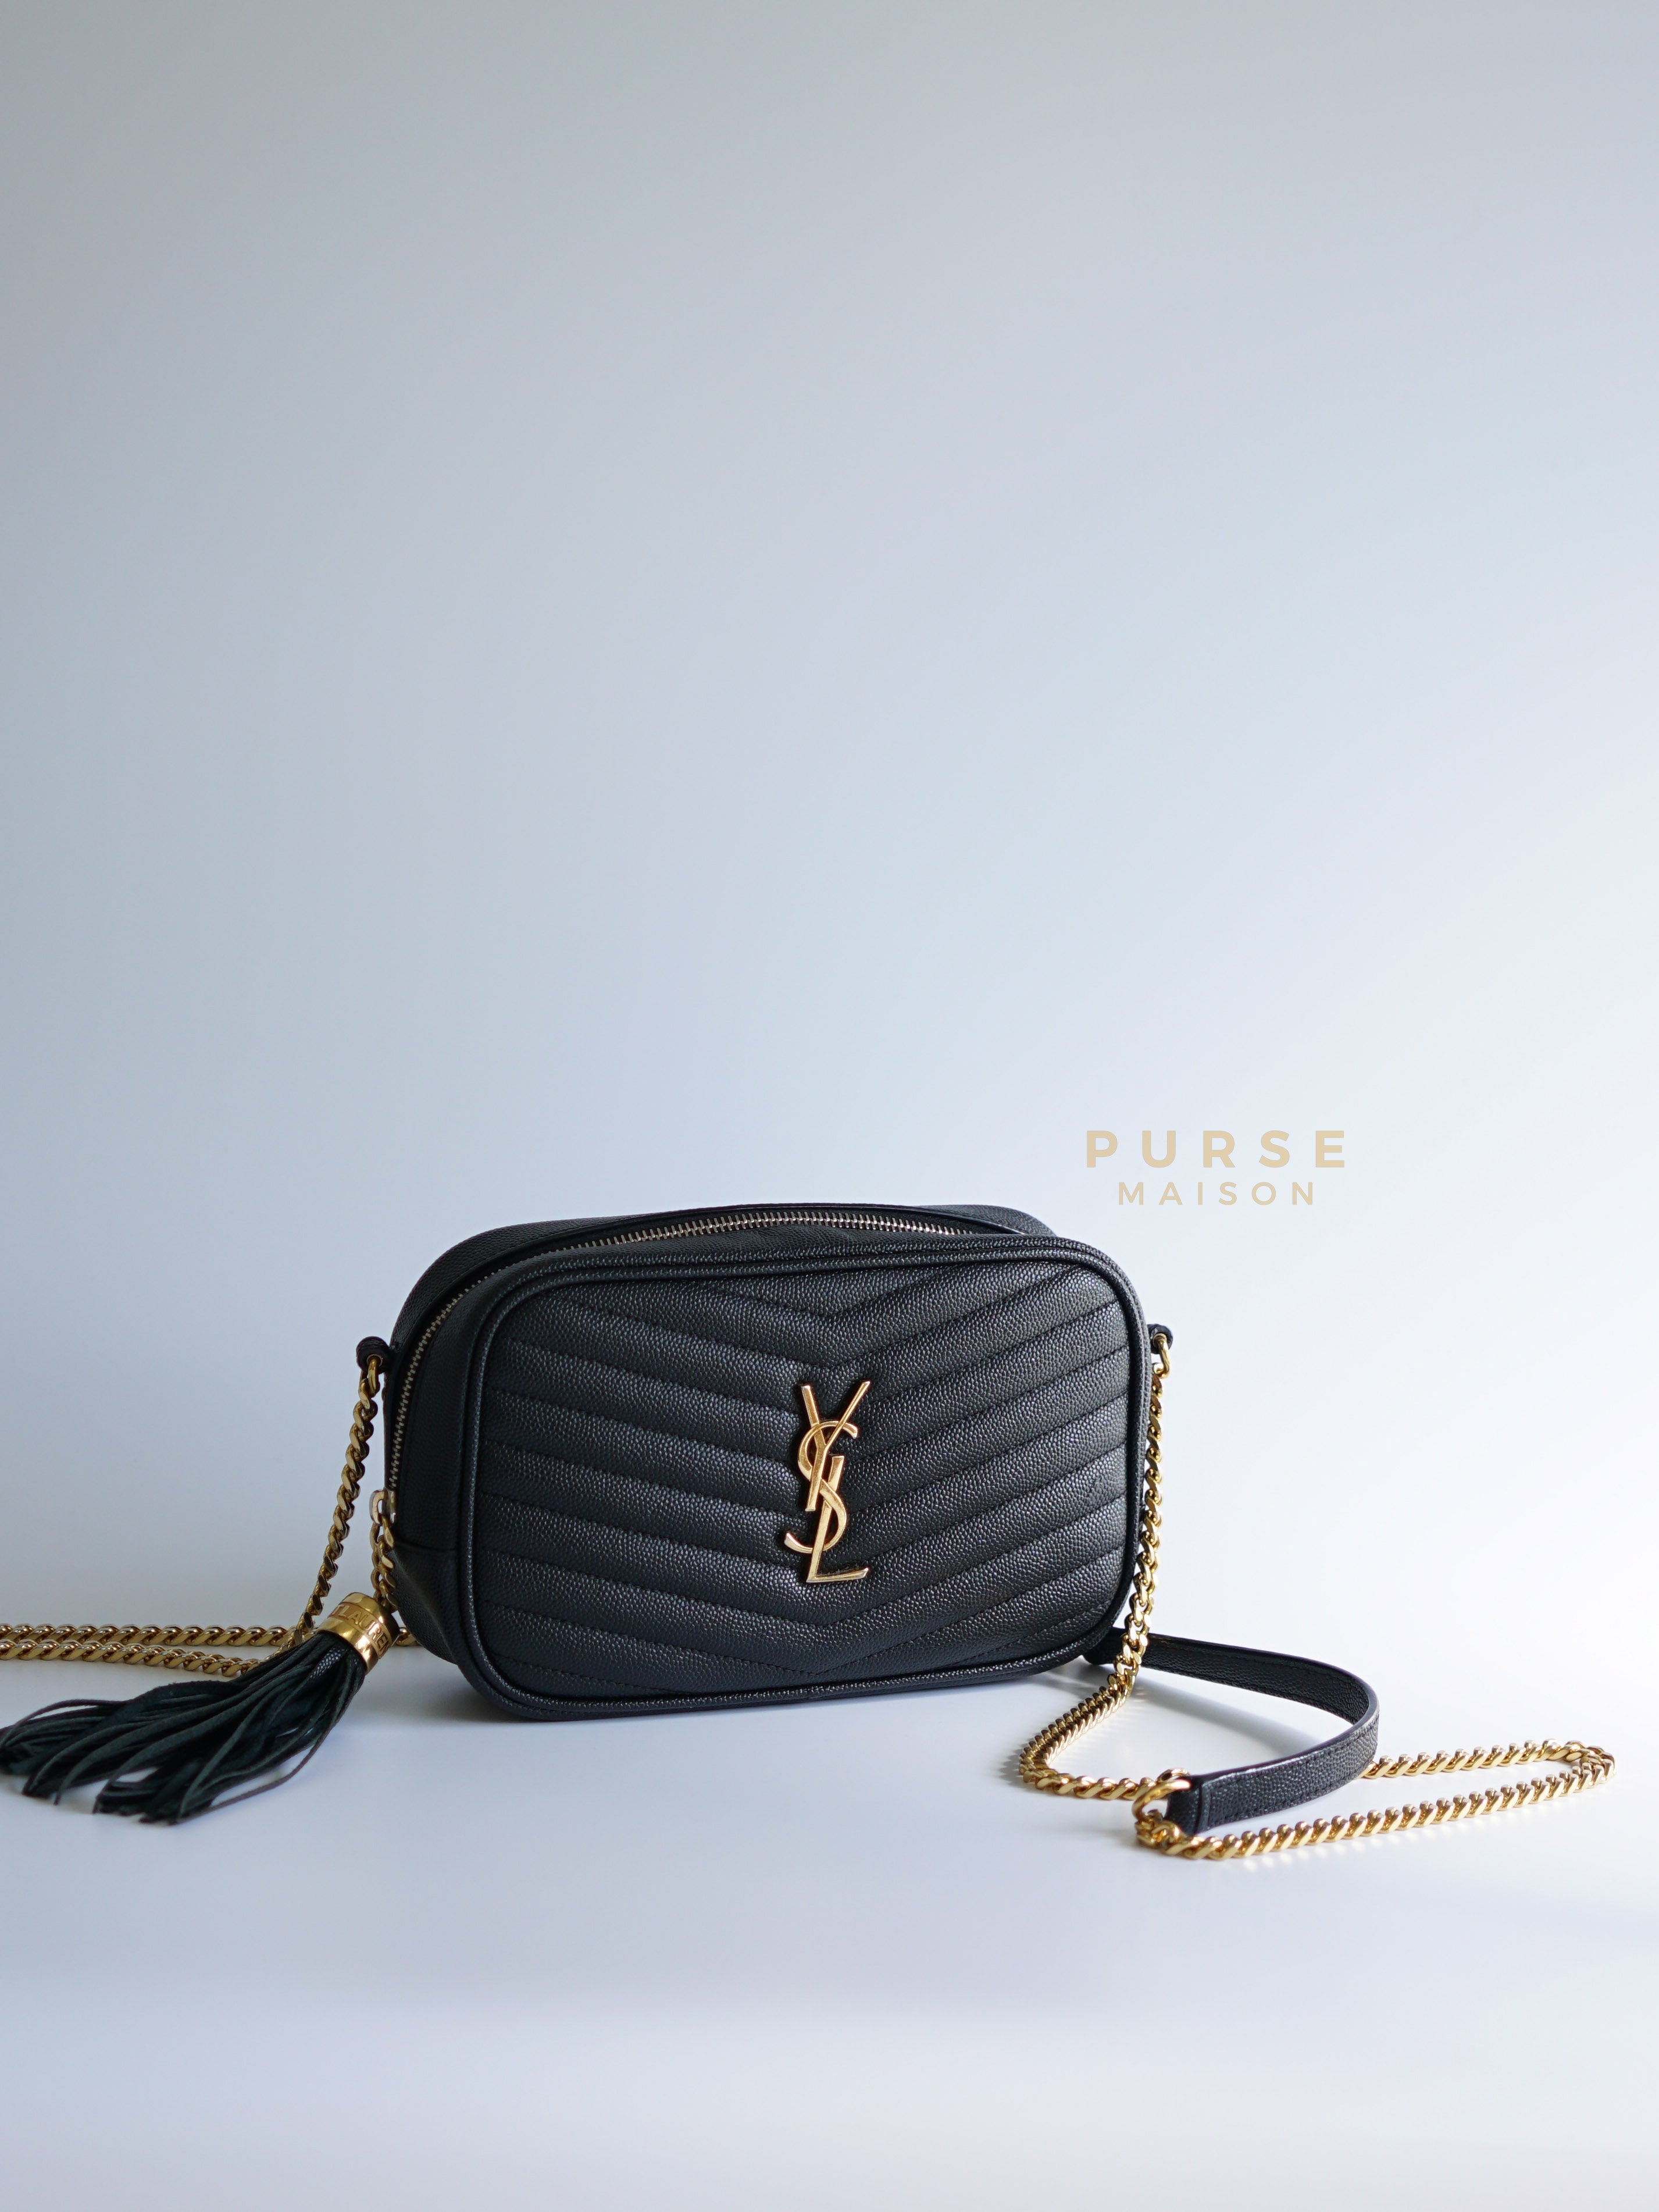 Mini Lou Camera Chain Bag Black in Gold Hardware | Purse Maison Luxury Bags Shop